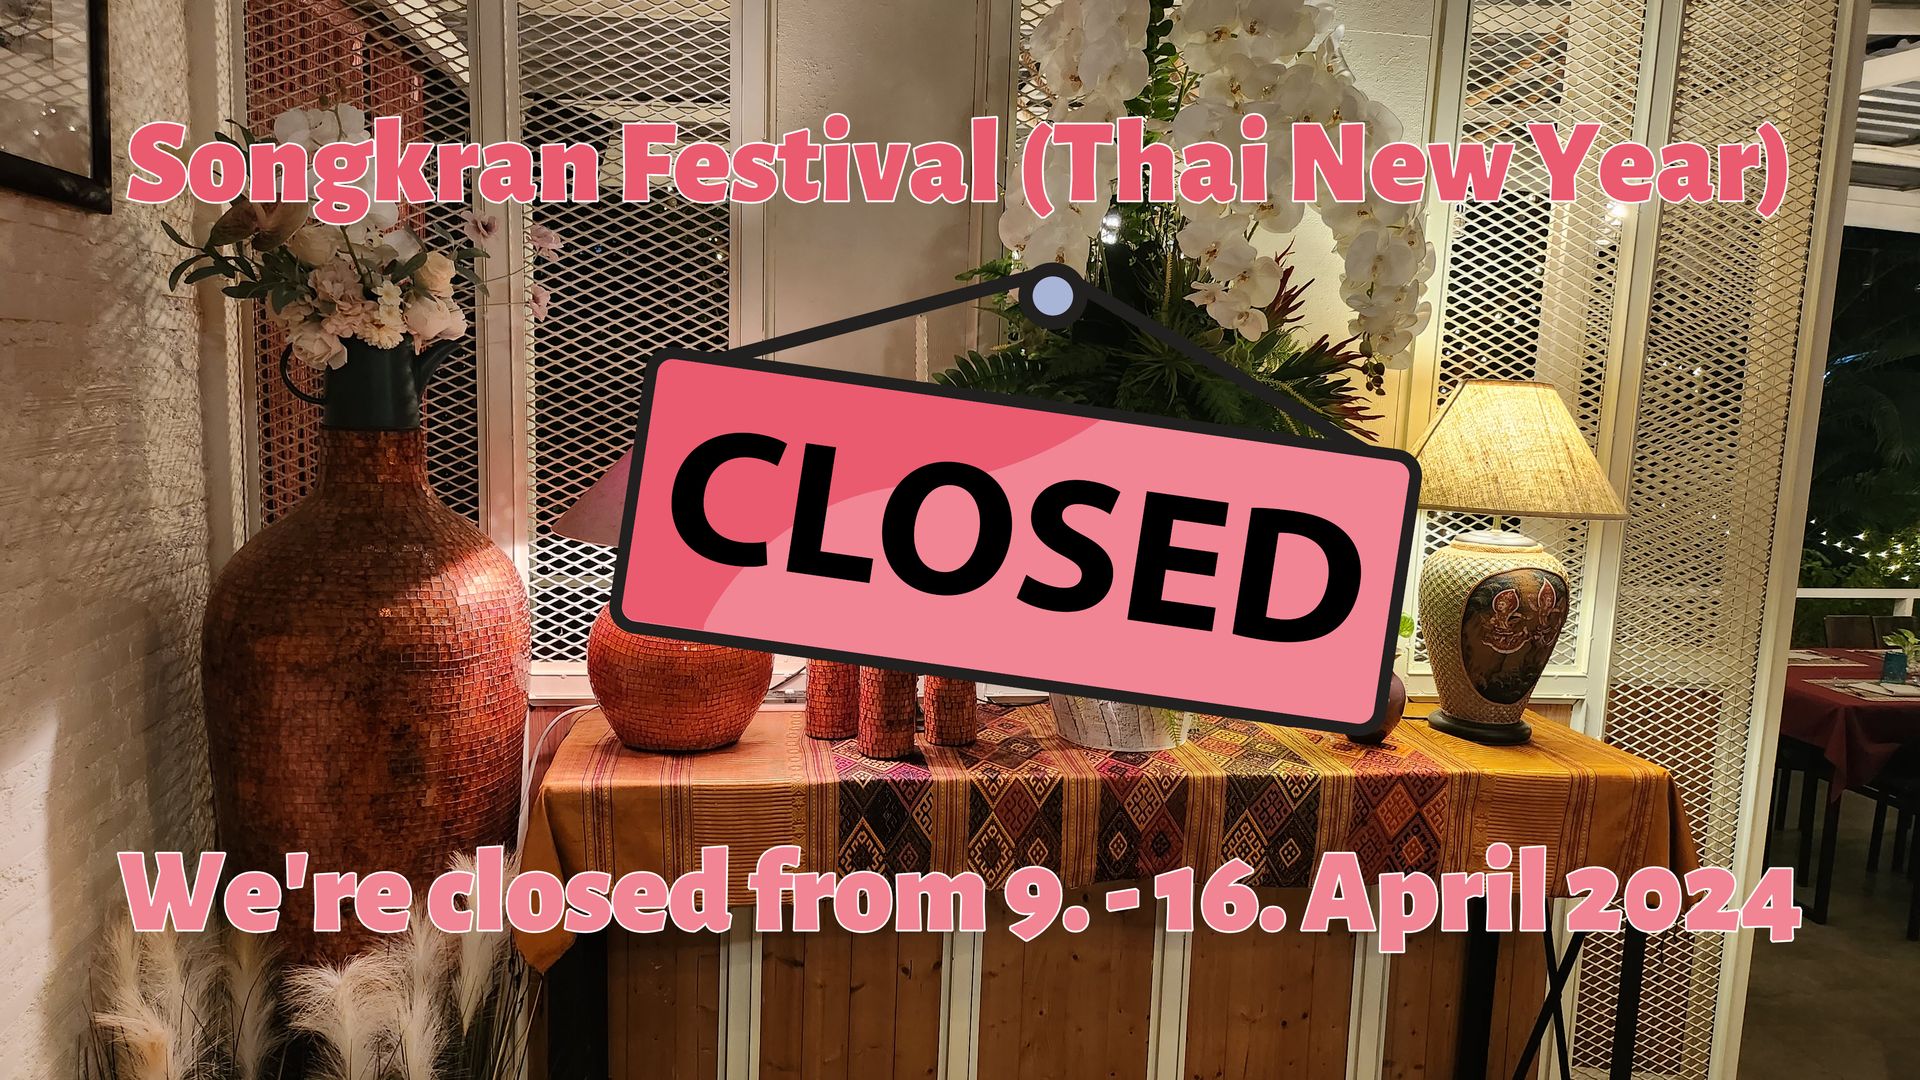 Closed during Songkran Festival